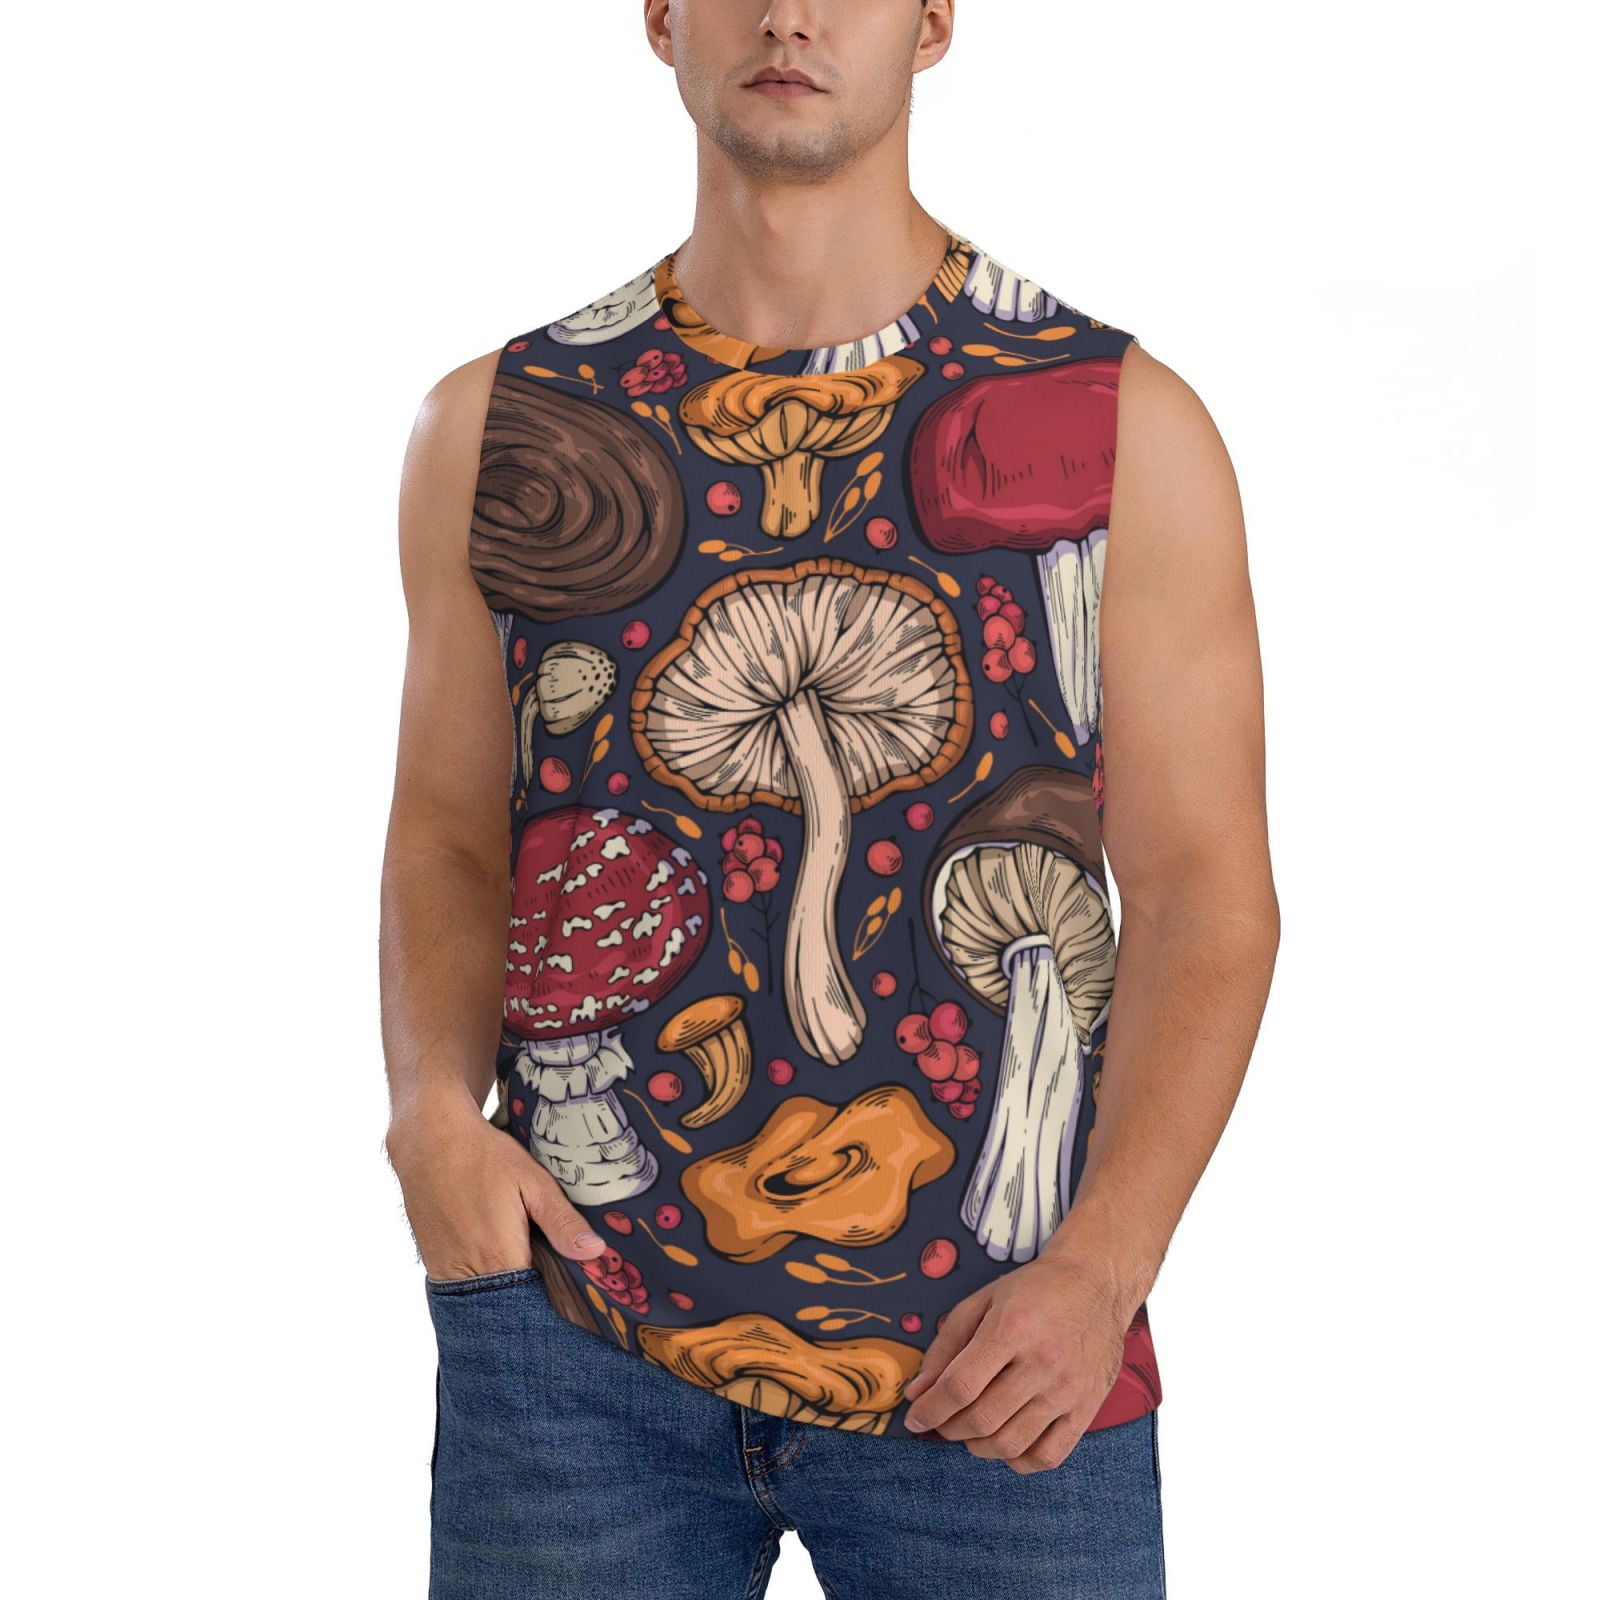 JUNZAN Forest Wild Mushroom Men's Sleeveless T Shirts,Sleeveless Muscle ...